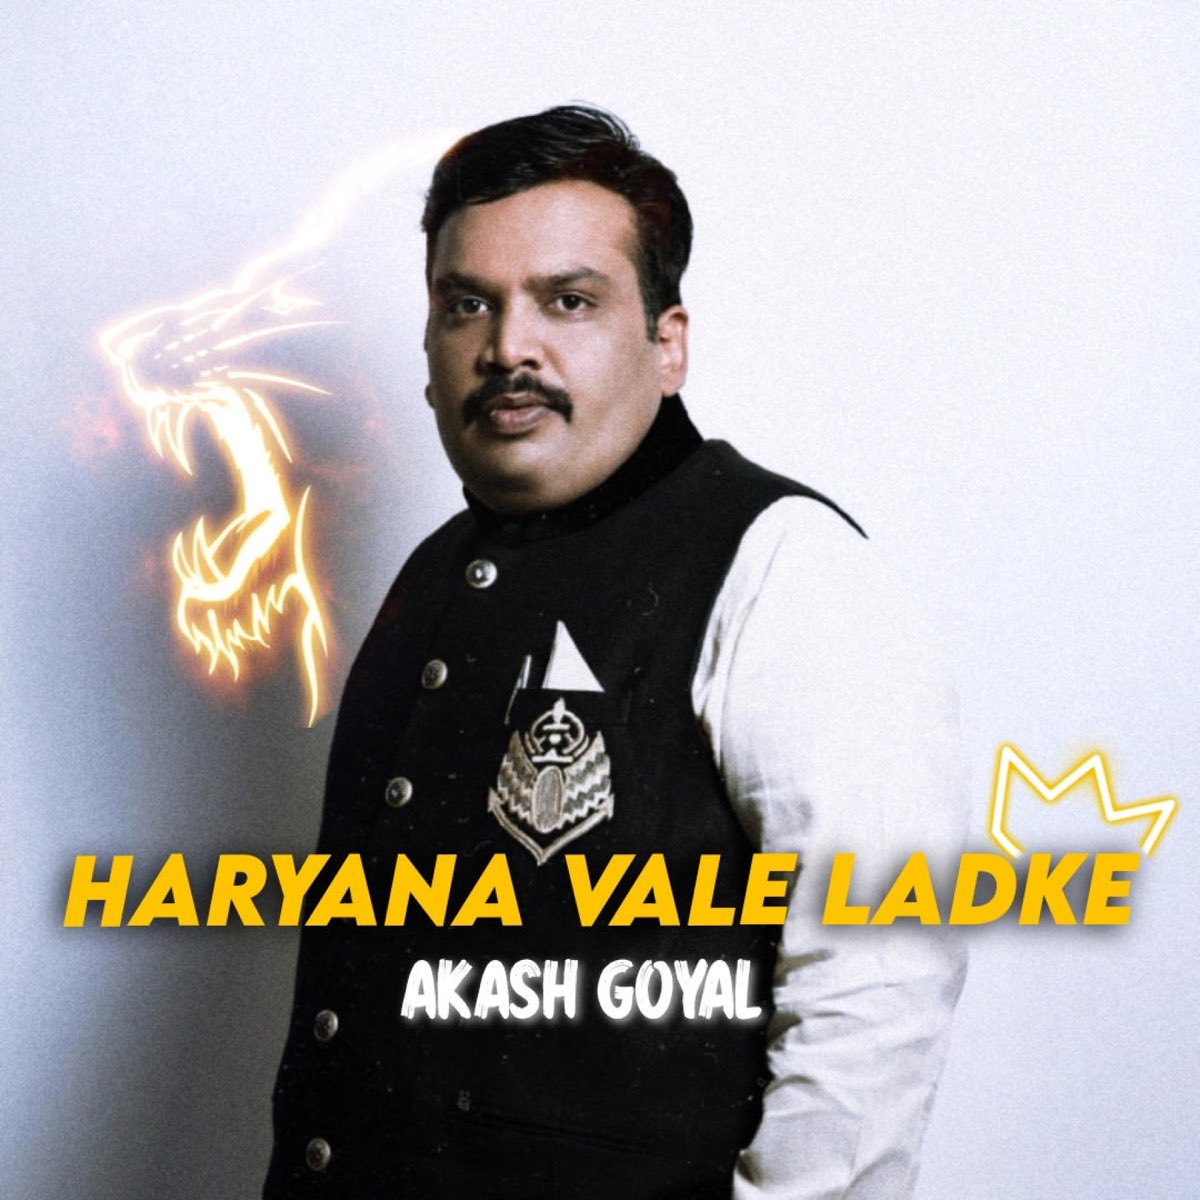 Haryana Vale Ladke - Single by Akash Goyal on Apple Music